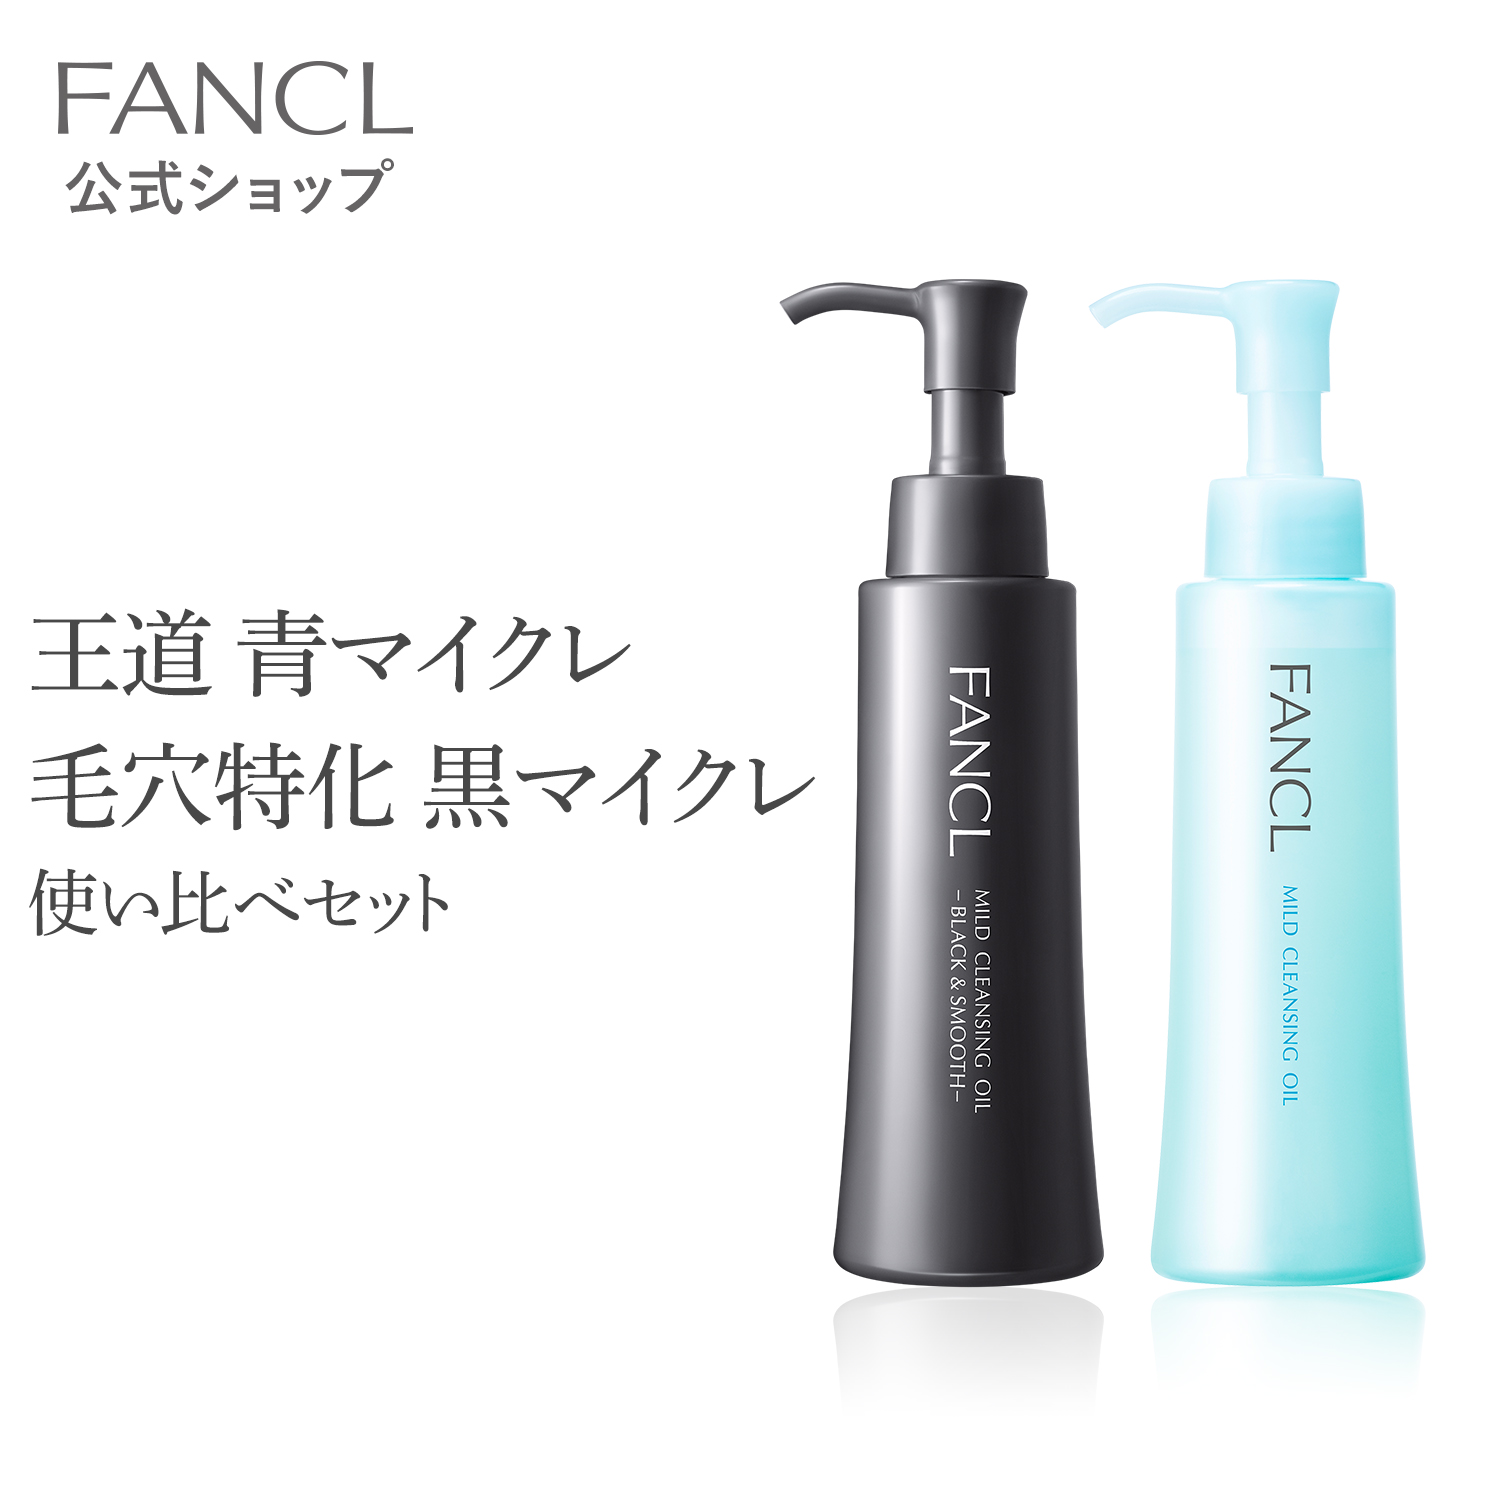 【FANCL】 洗顔 洗顔料 洗顔フォーム\u0026マイルドクレンジングオイル